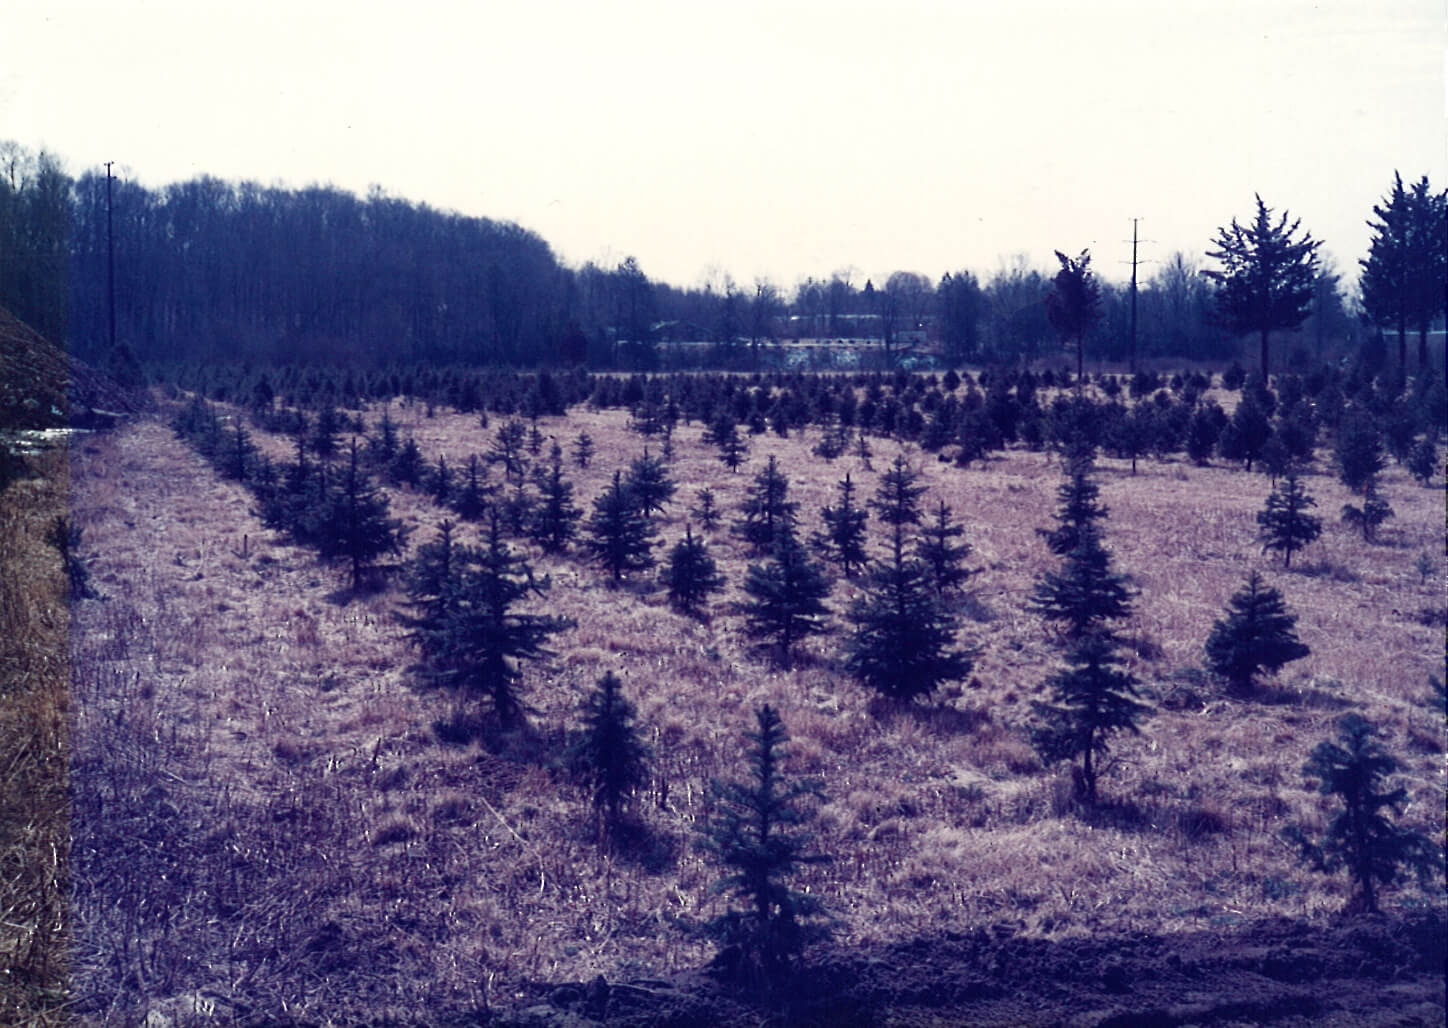 Pine trees growing in a field.